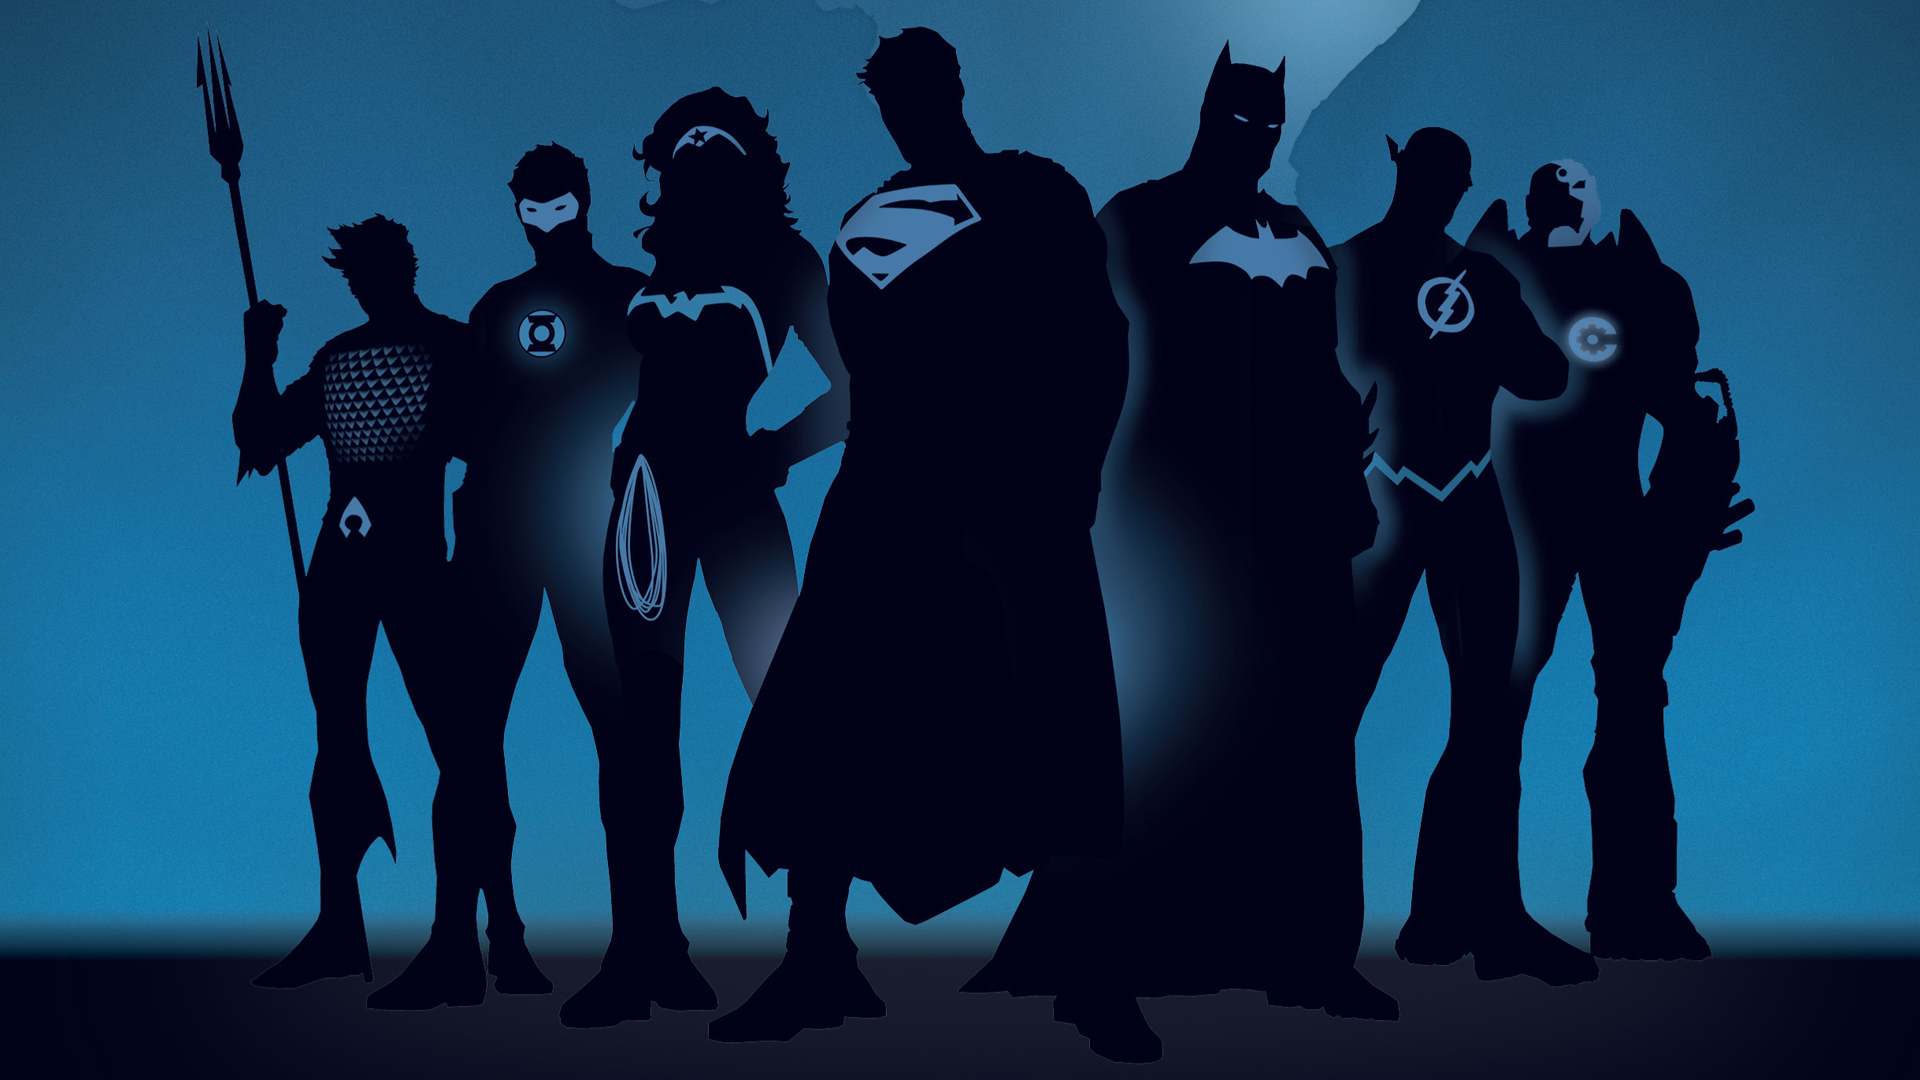 HD wallpaper bruce wayne, batman, comics, diana prince, justice league, superman, dc comics, wonder woman, aquaman, barry allen, cyborg (dc comics), flash, green lantern, the dark knight